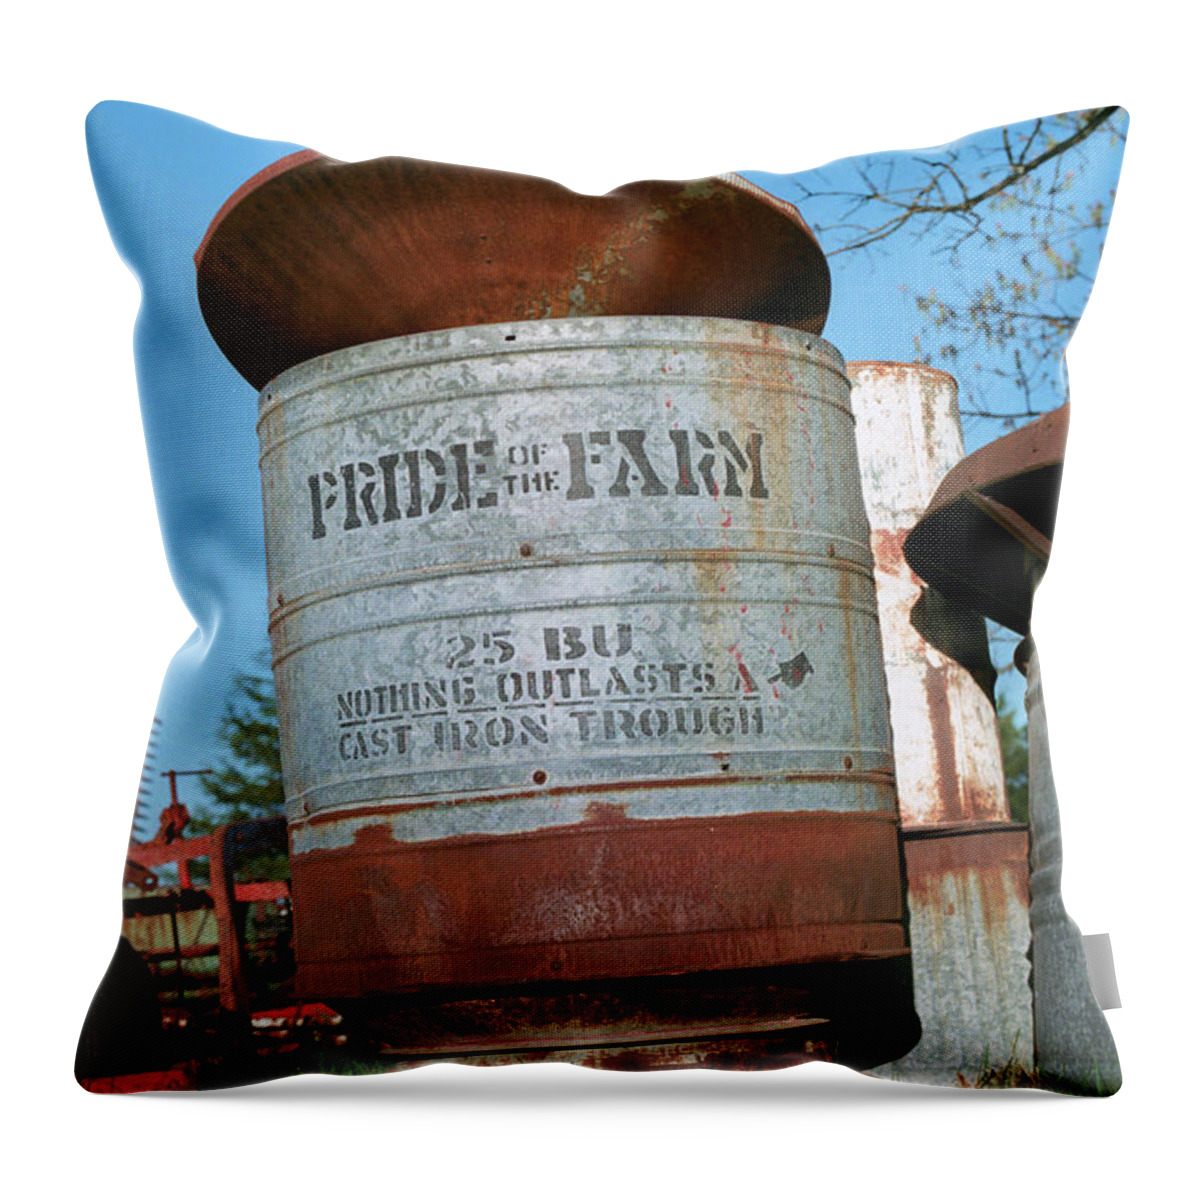 Farm Throw Pillow featuring the photograph Pride of the Farm 25 bushel feeder by Grant Groberg